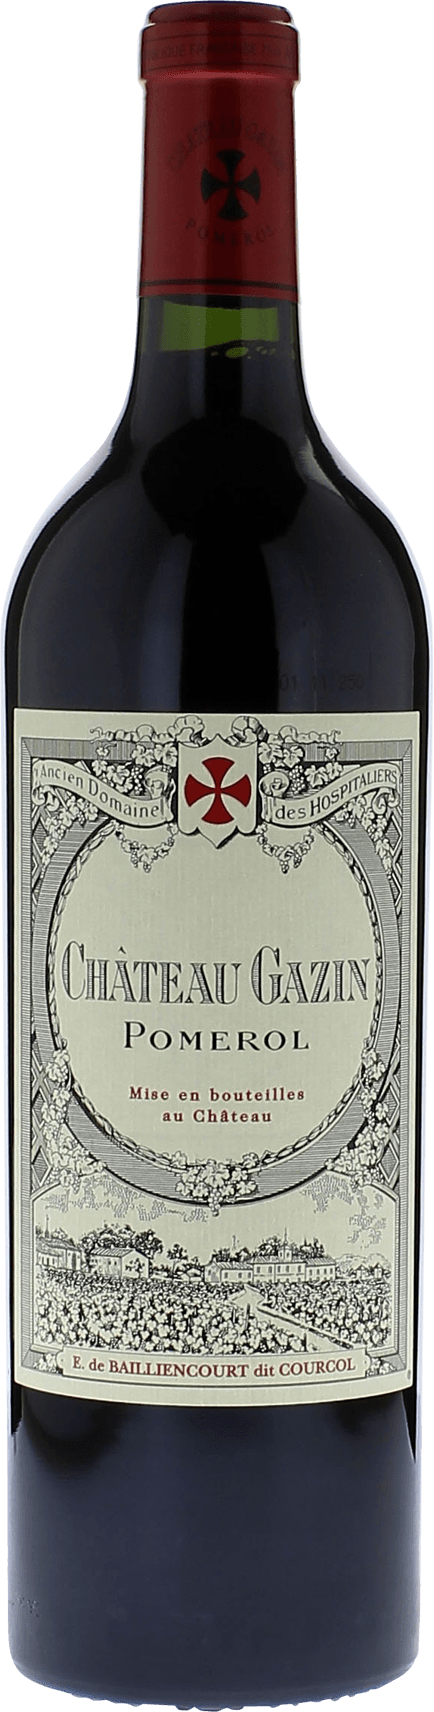 Gazin 1983  Pomerol, Bordeaux rouge